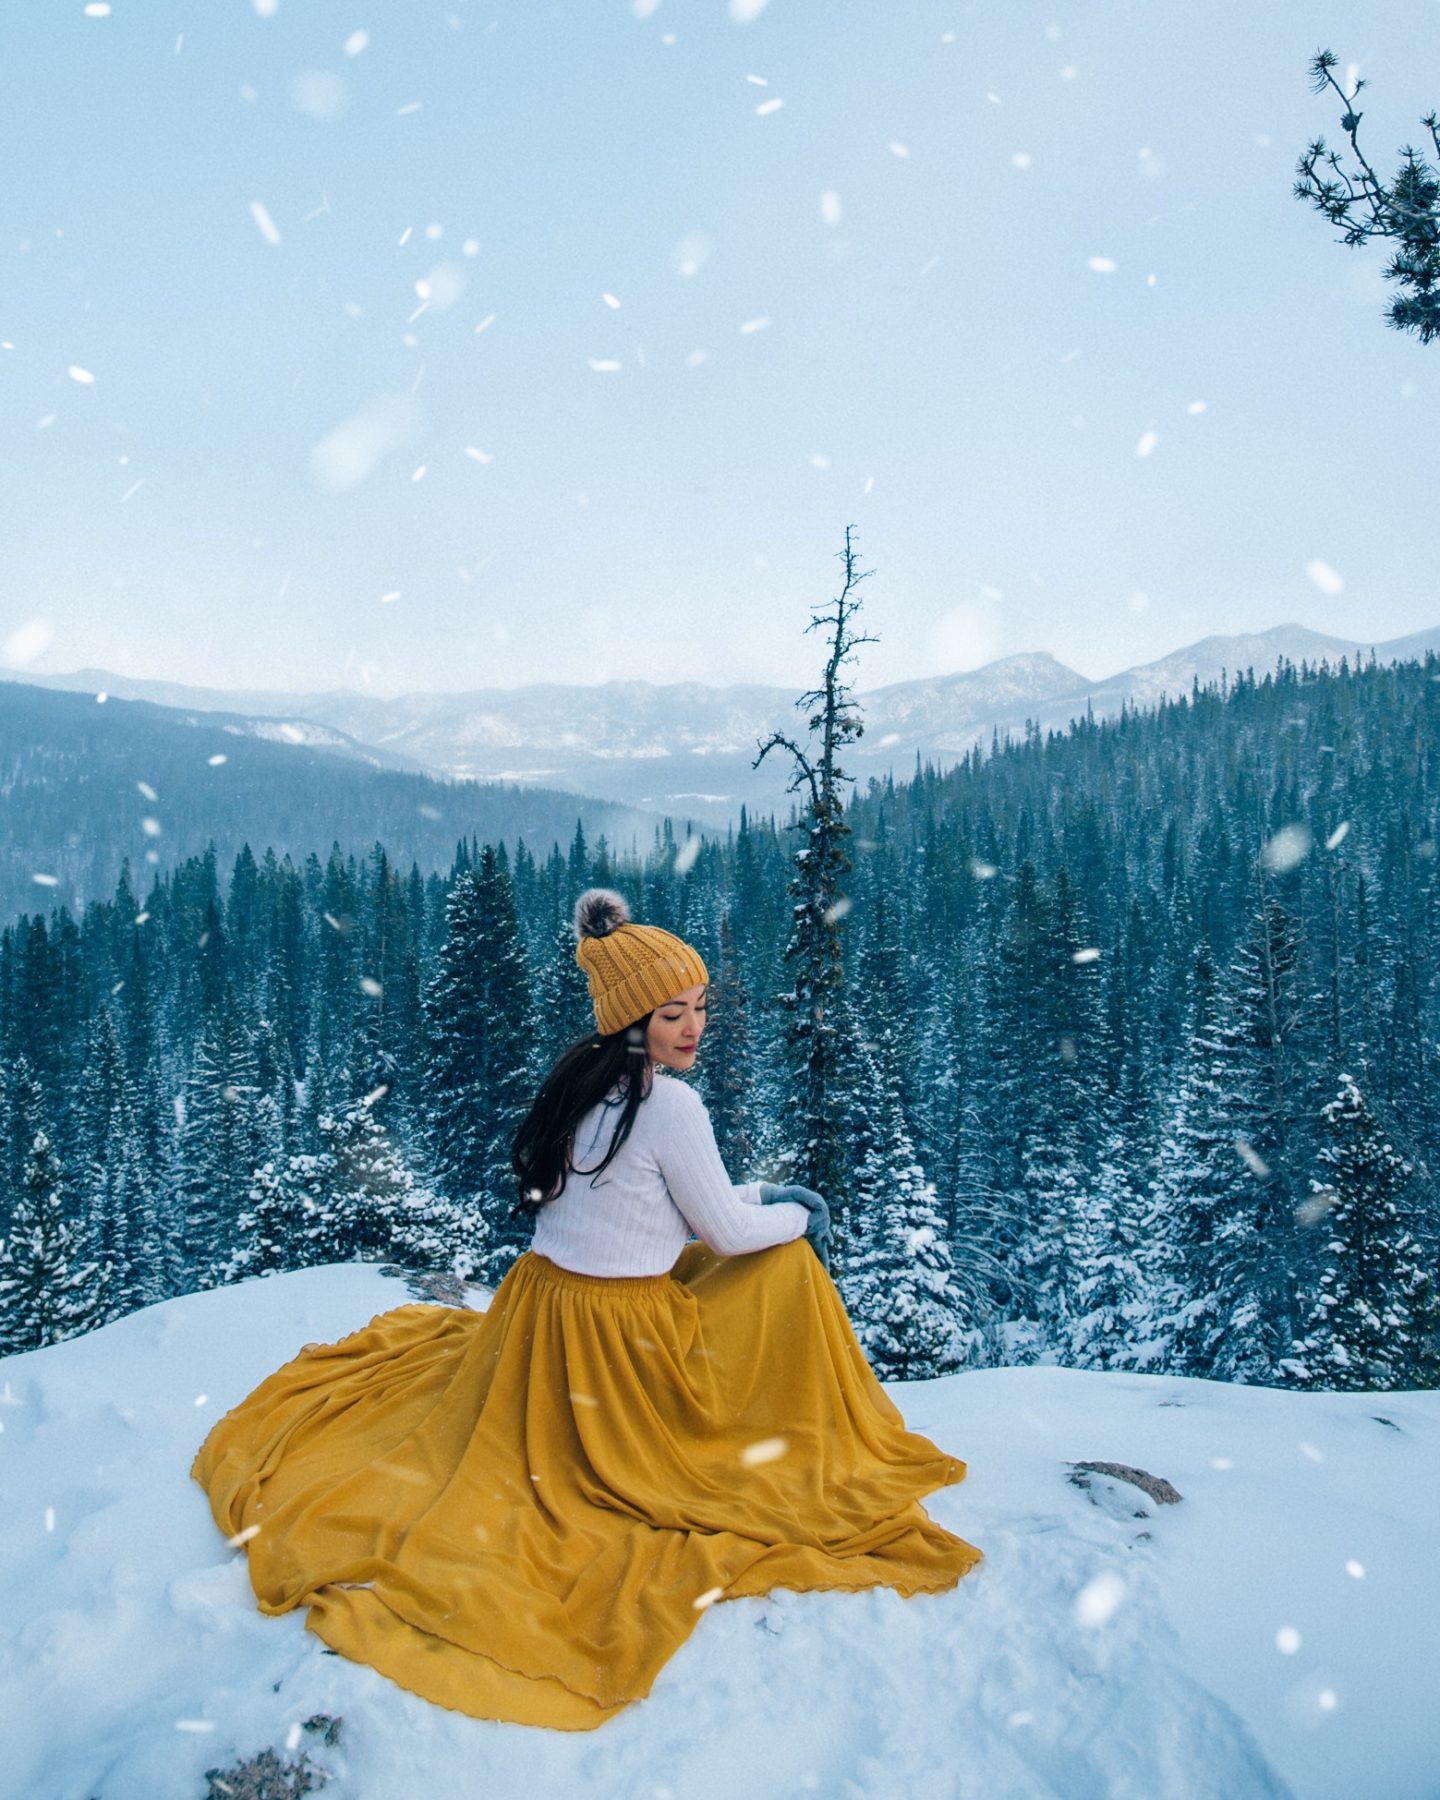 22 Creative Winter Photoshoot Ideas - Whimsical Winter Photography